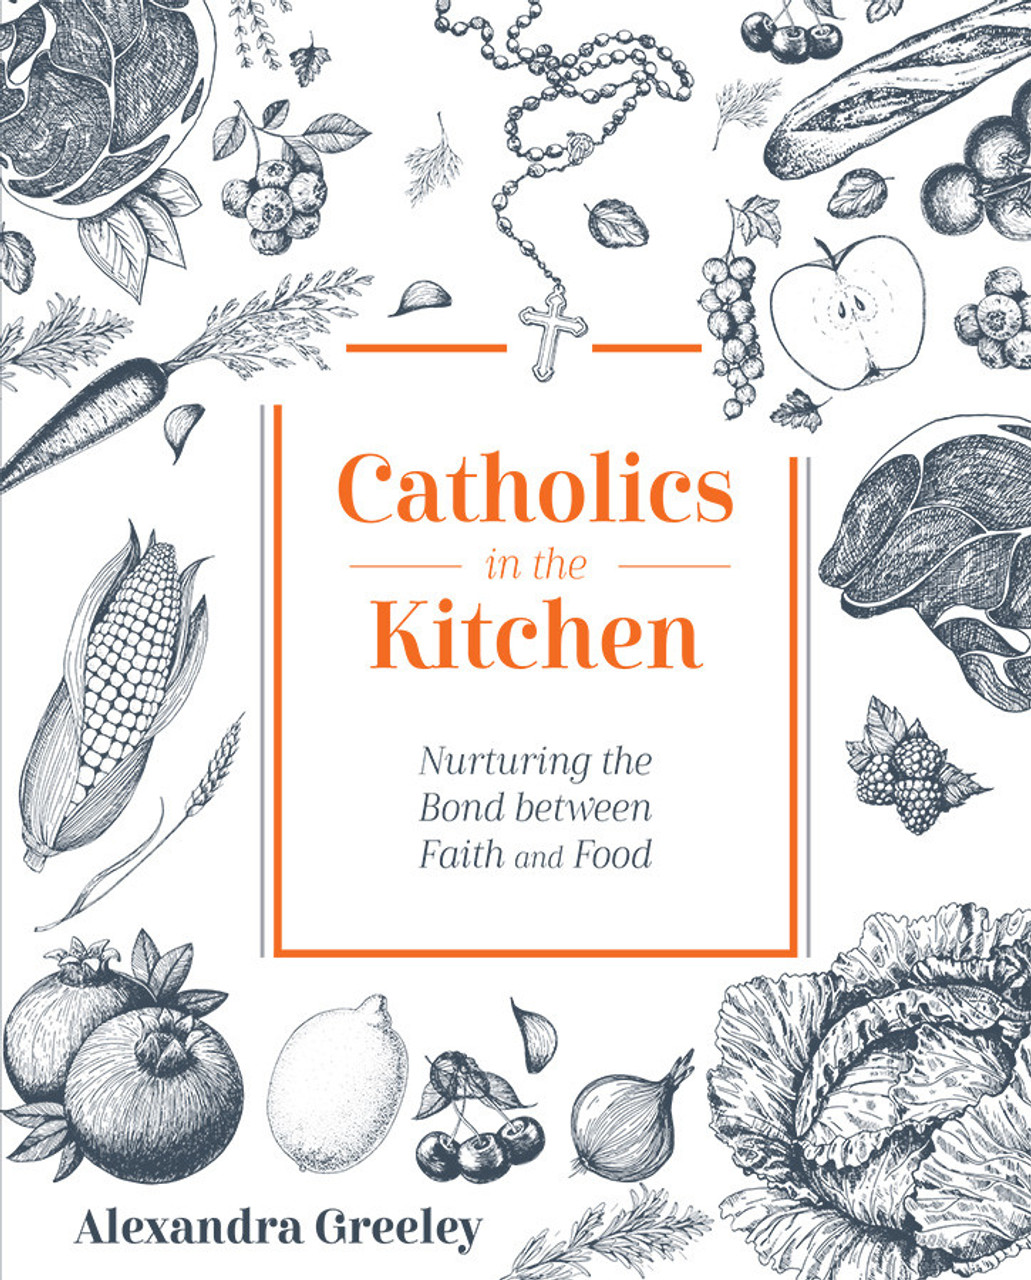 Catholics in the Kitchen / Alexandra Greeley